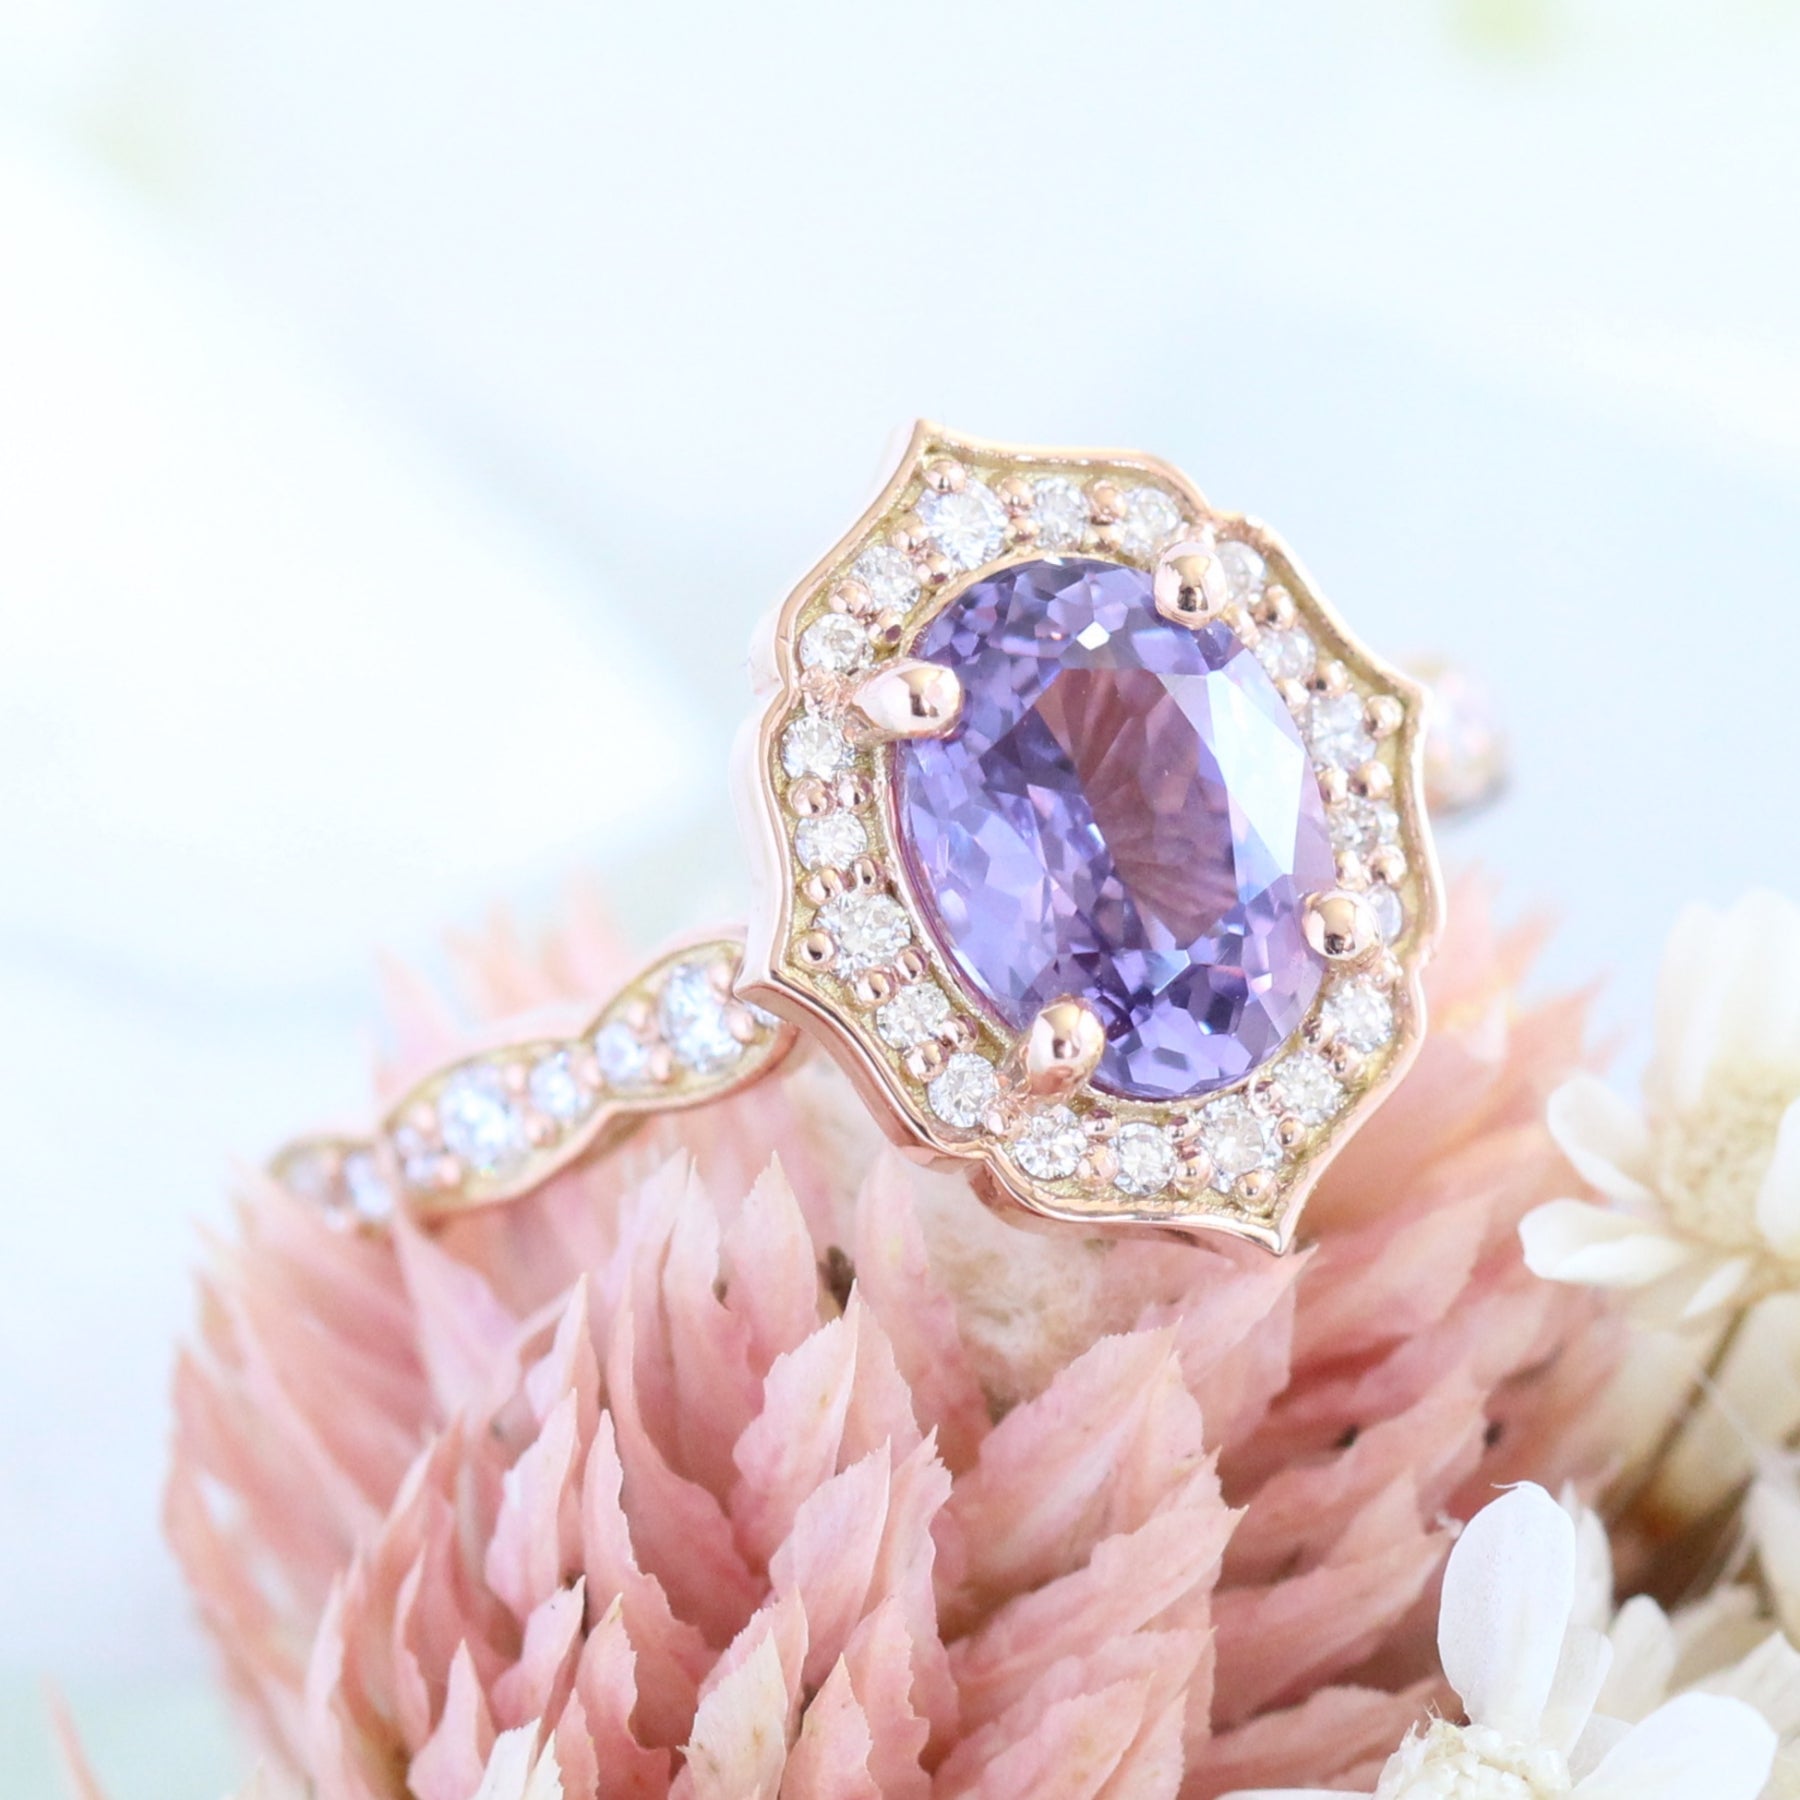 Lavender purple sapphire engagement ring rose gold vintage halo diamond ring la more design jewelry